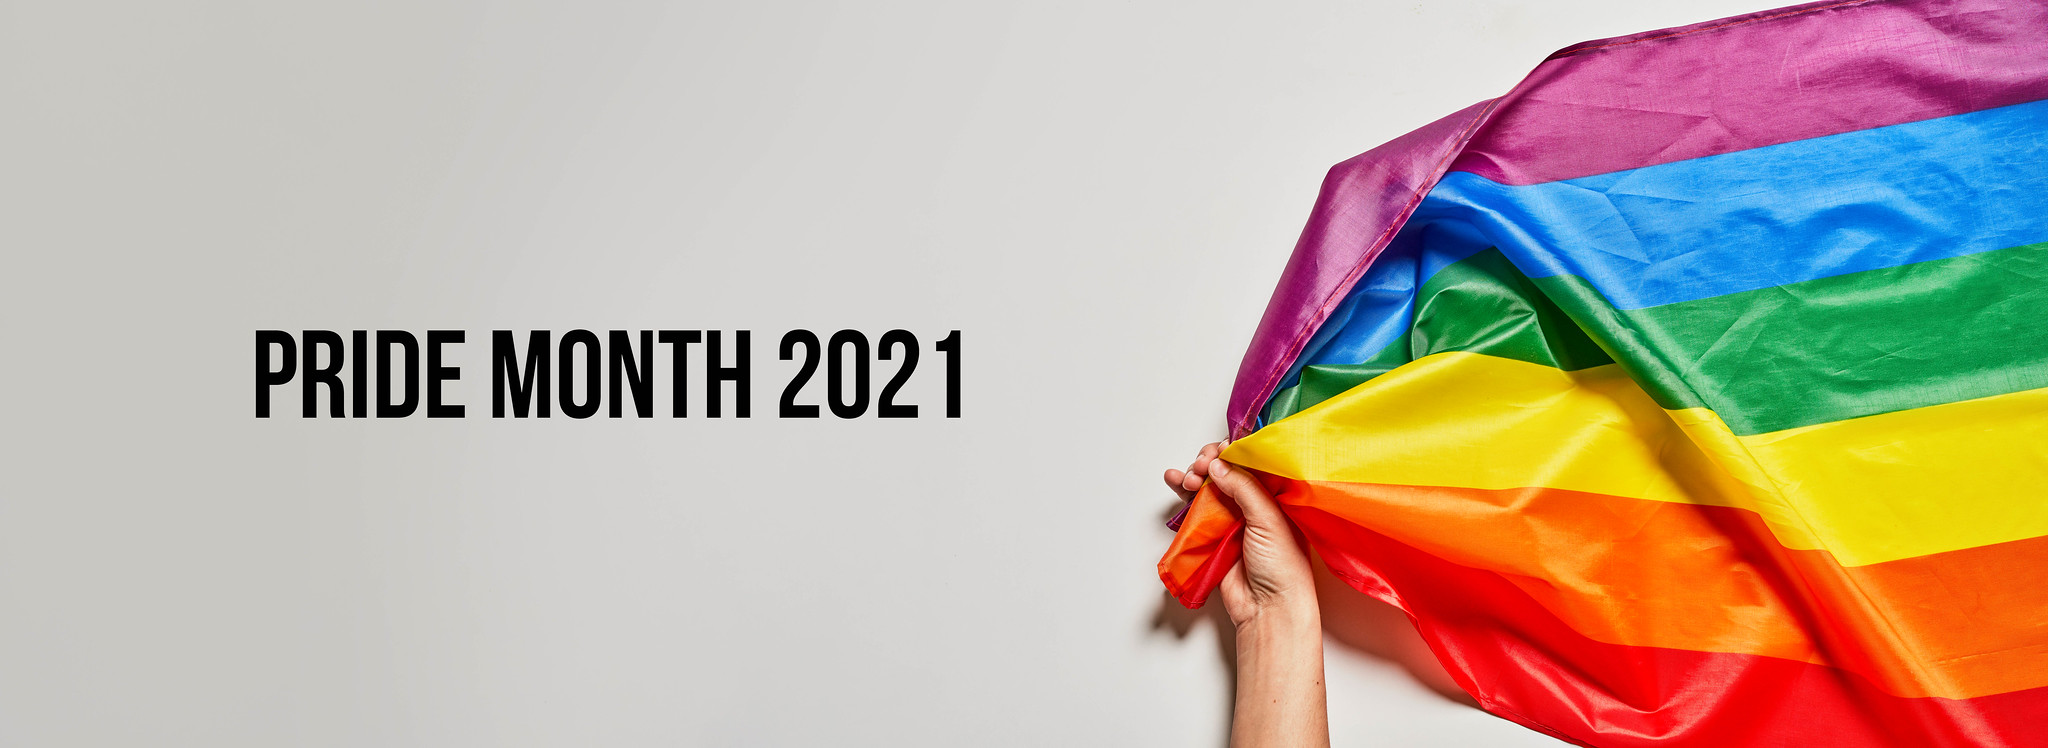 Pride Month 2021 - LBGTQ activist holds a big rainbow flag